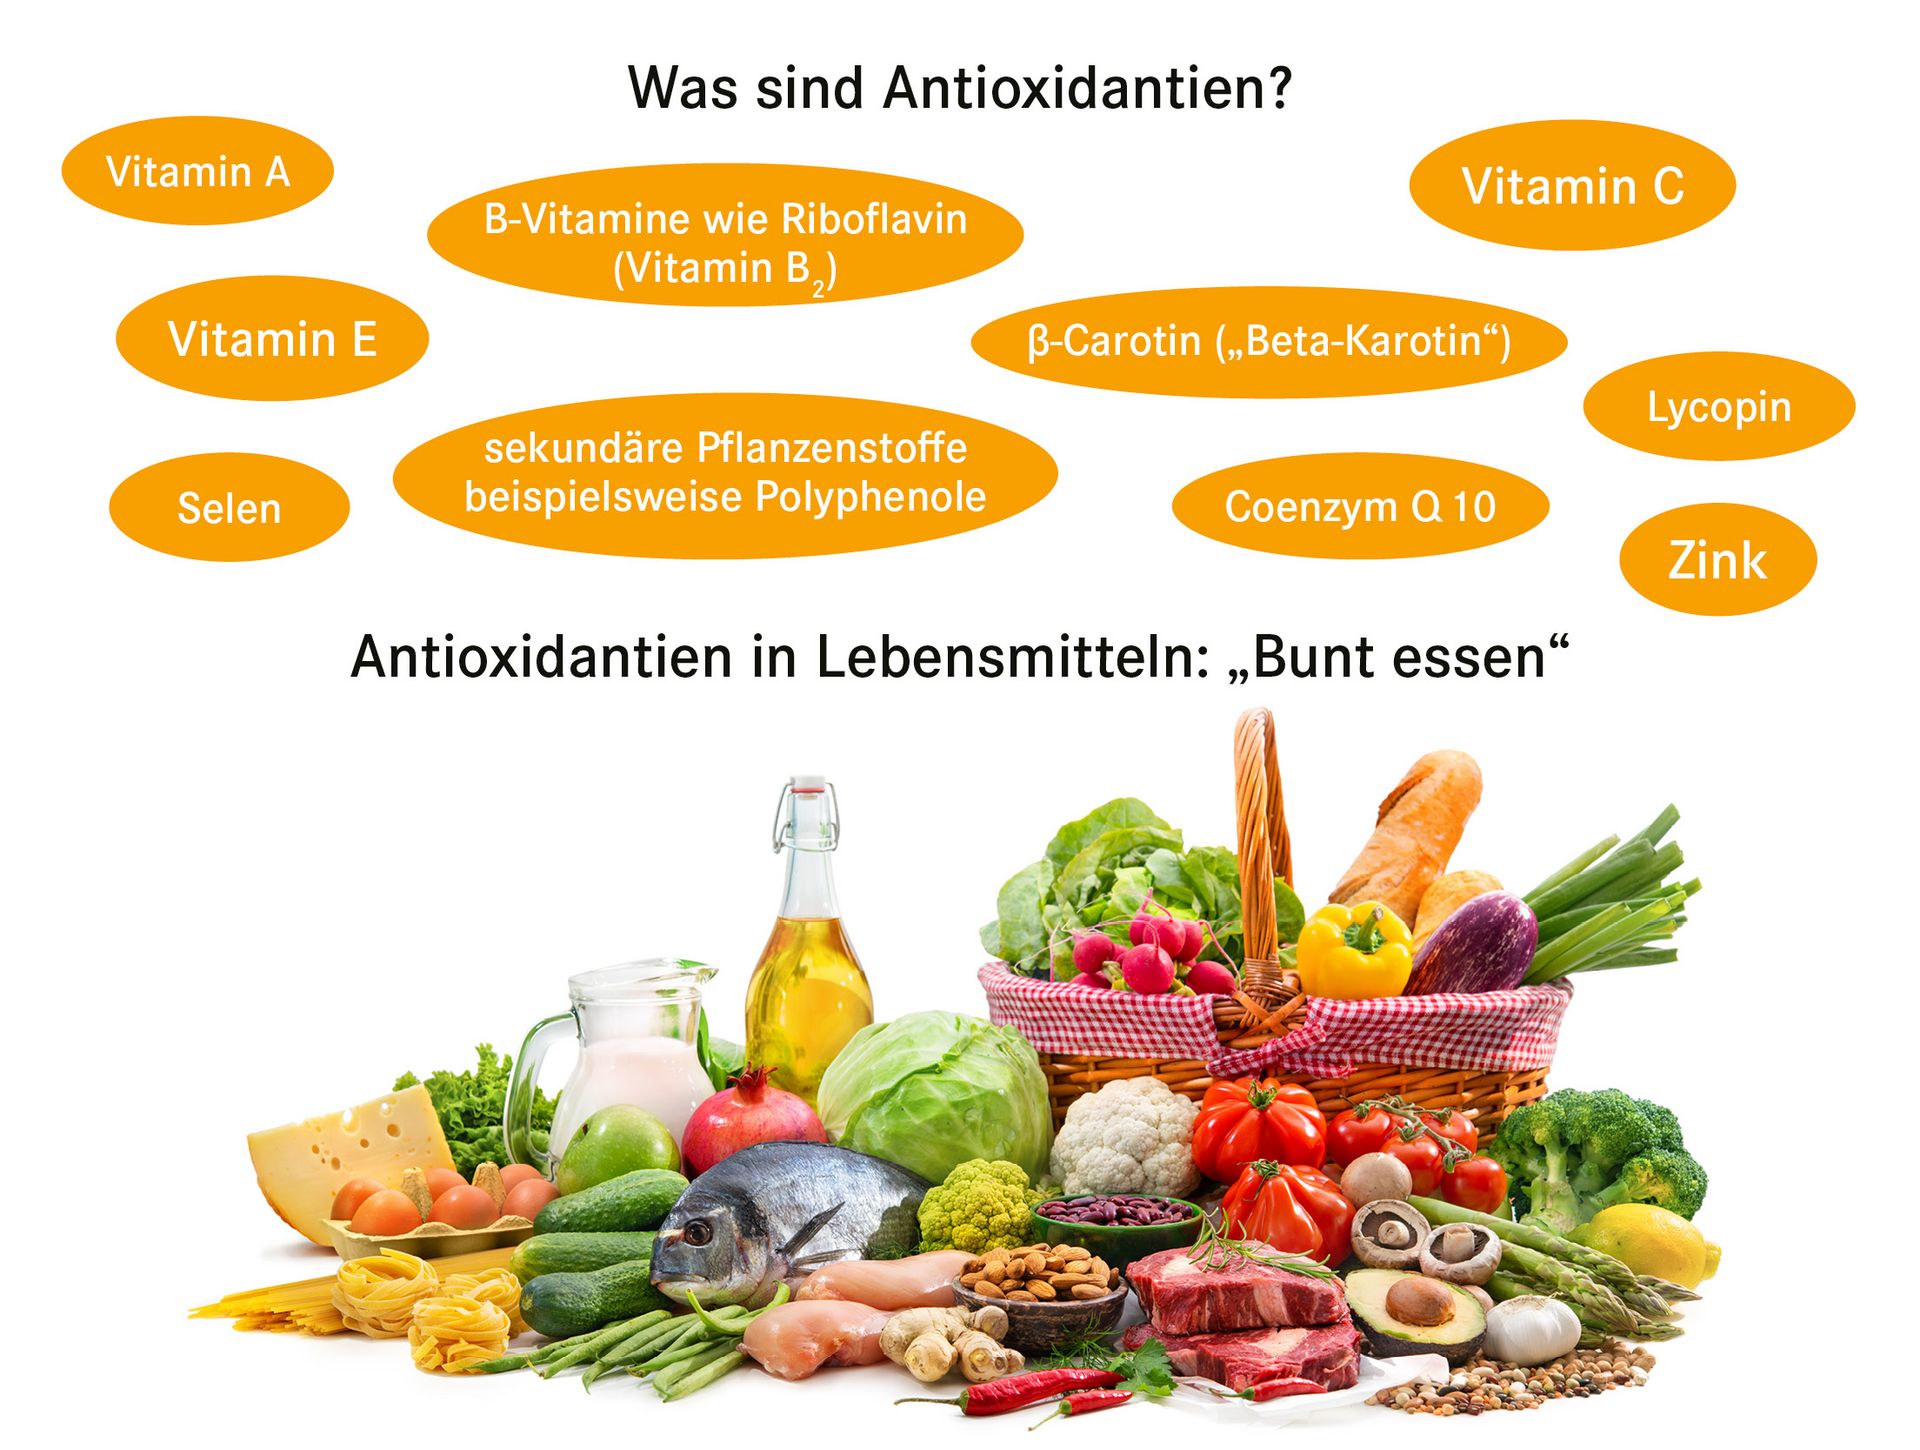 Was sind Antioxidantien? Antioxidantien in Lebensmitteln 